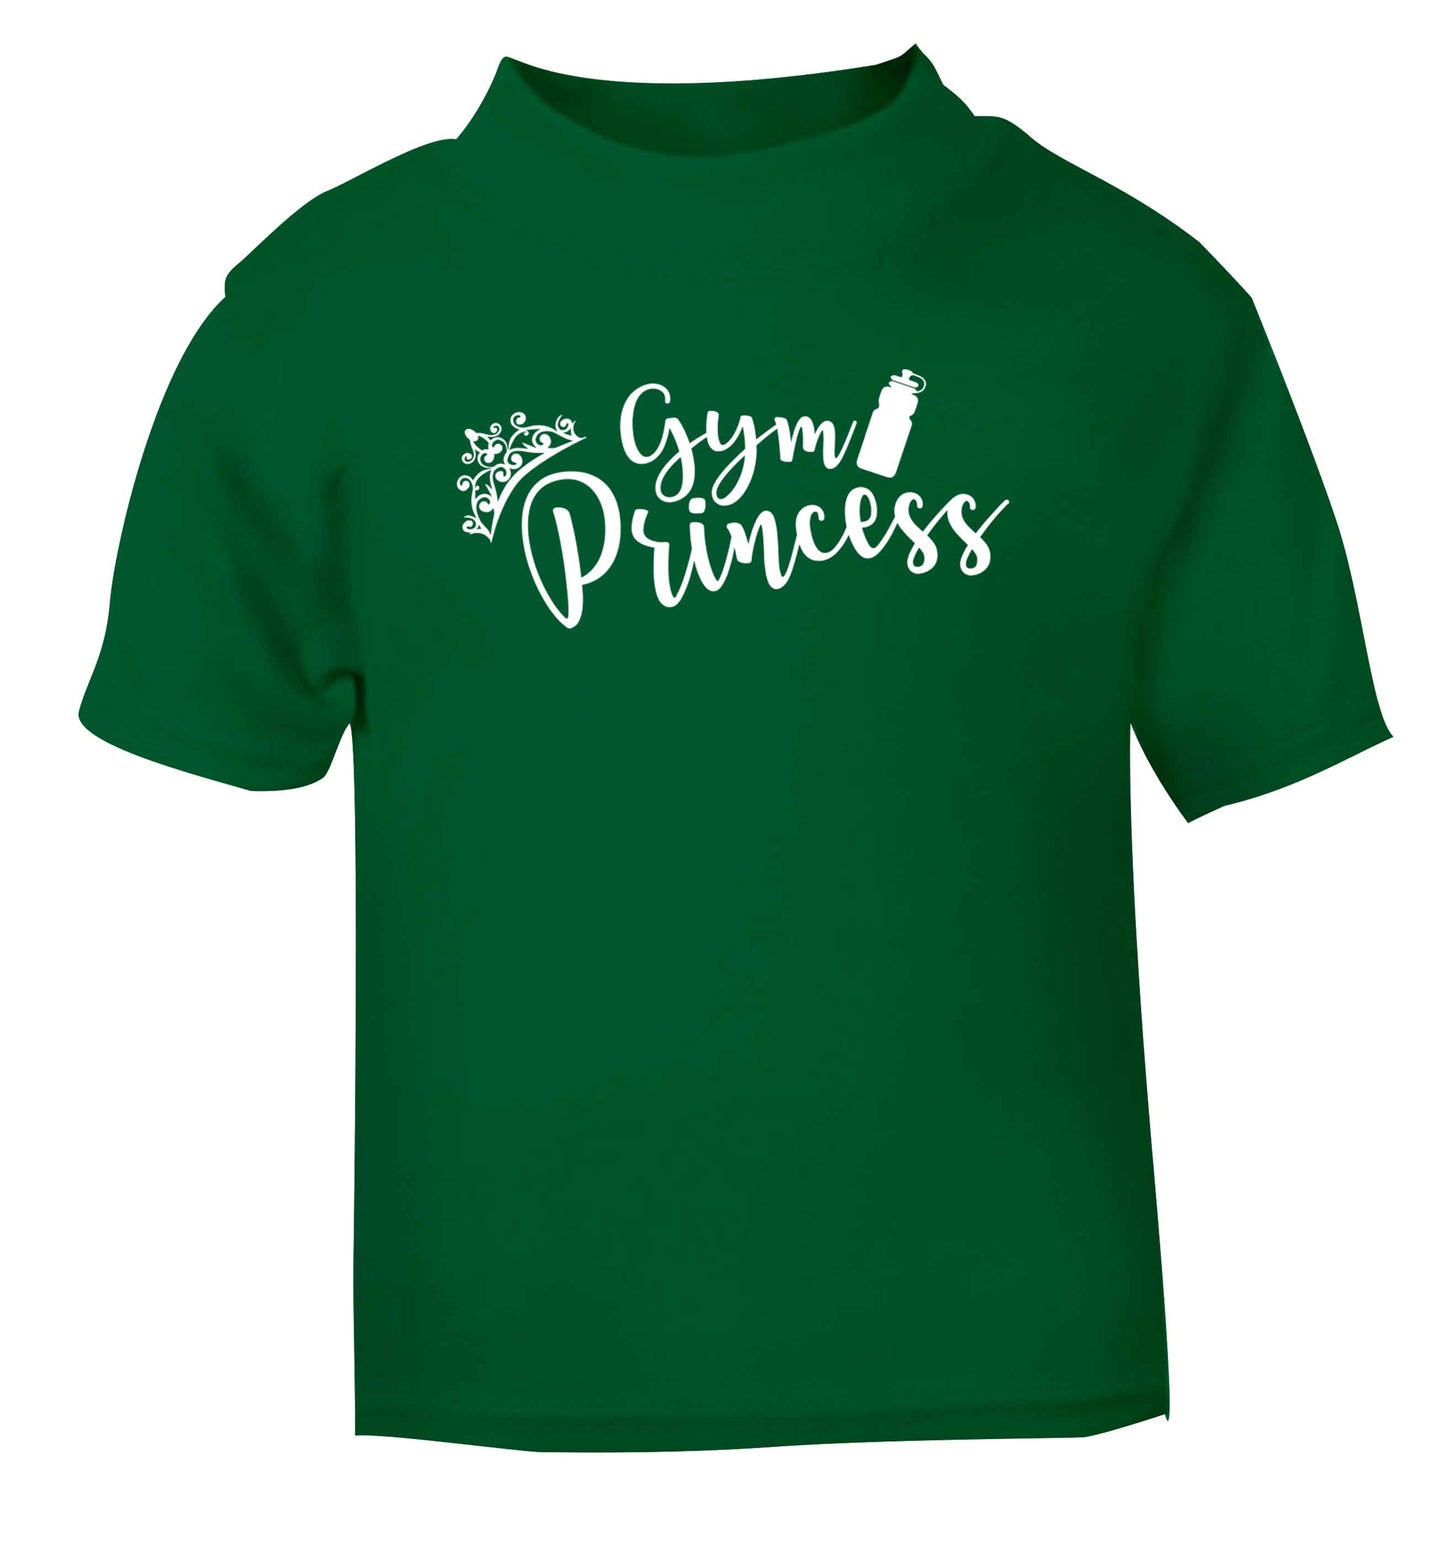 Gym princess green Baby Toddler Tshirt 2 Years